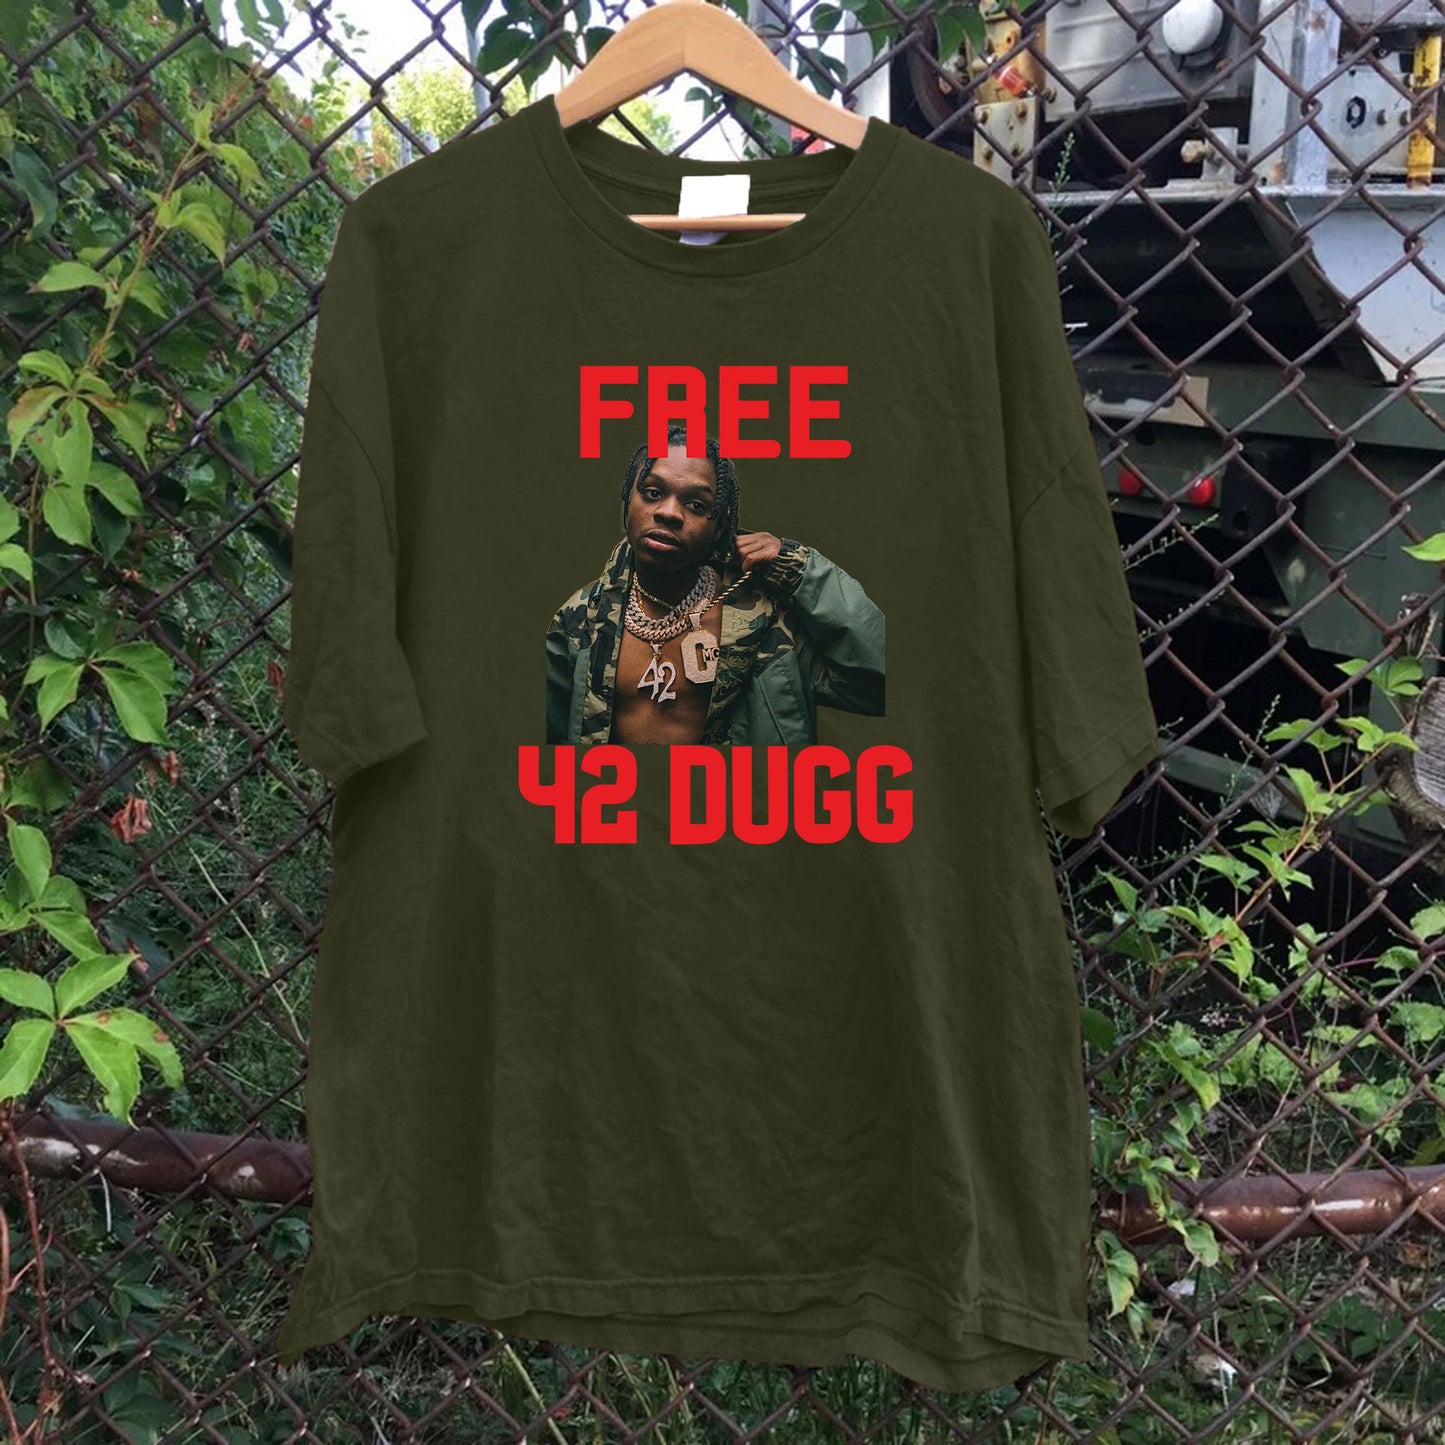 Free 42 Dugg Tee